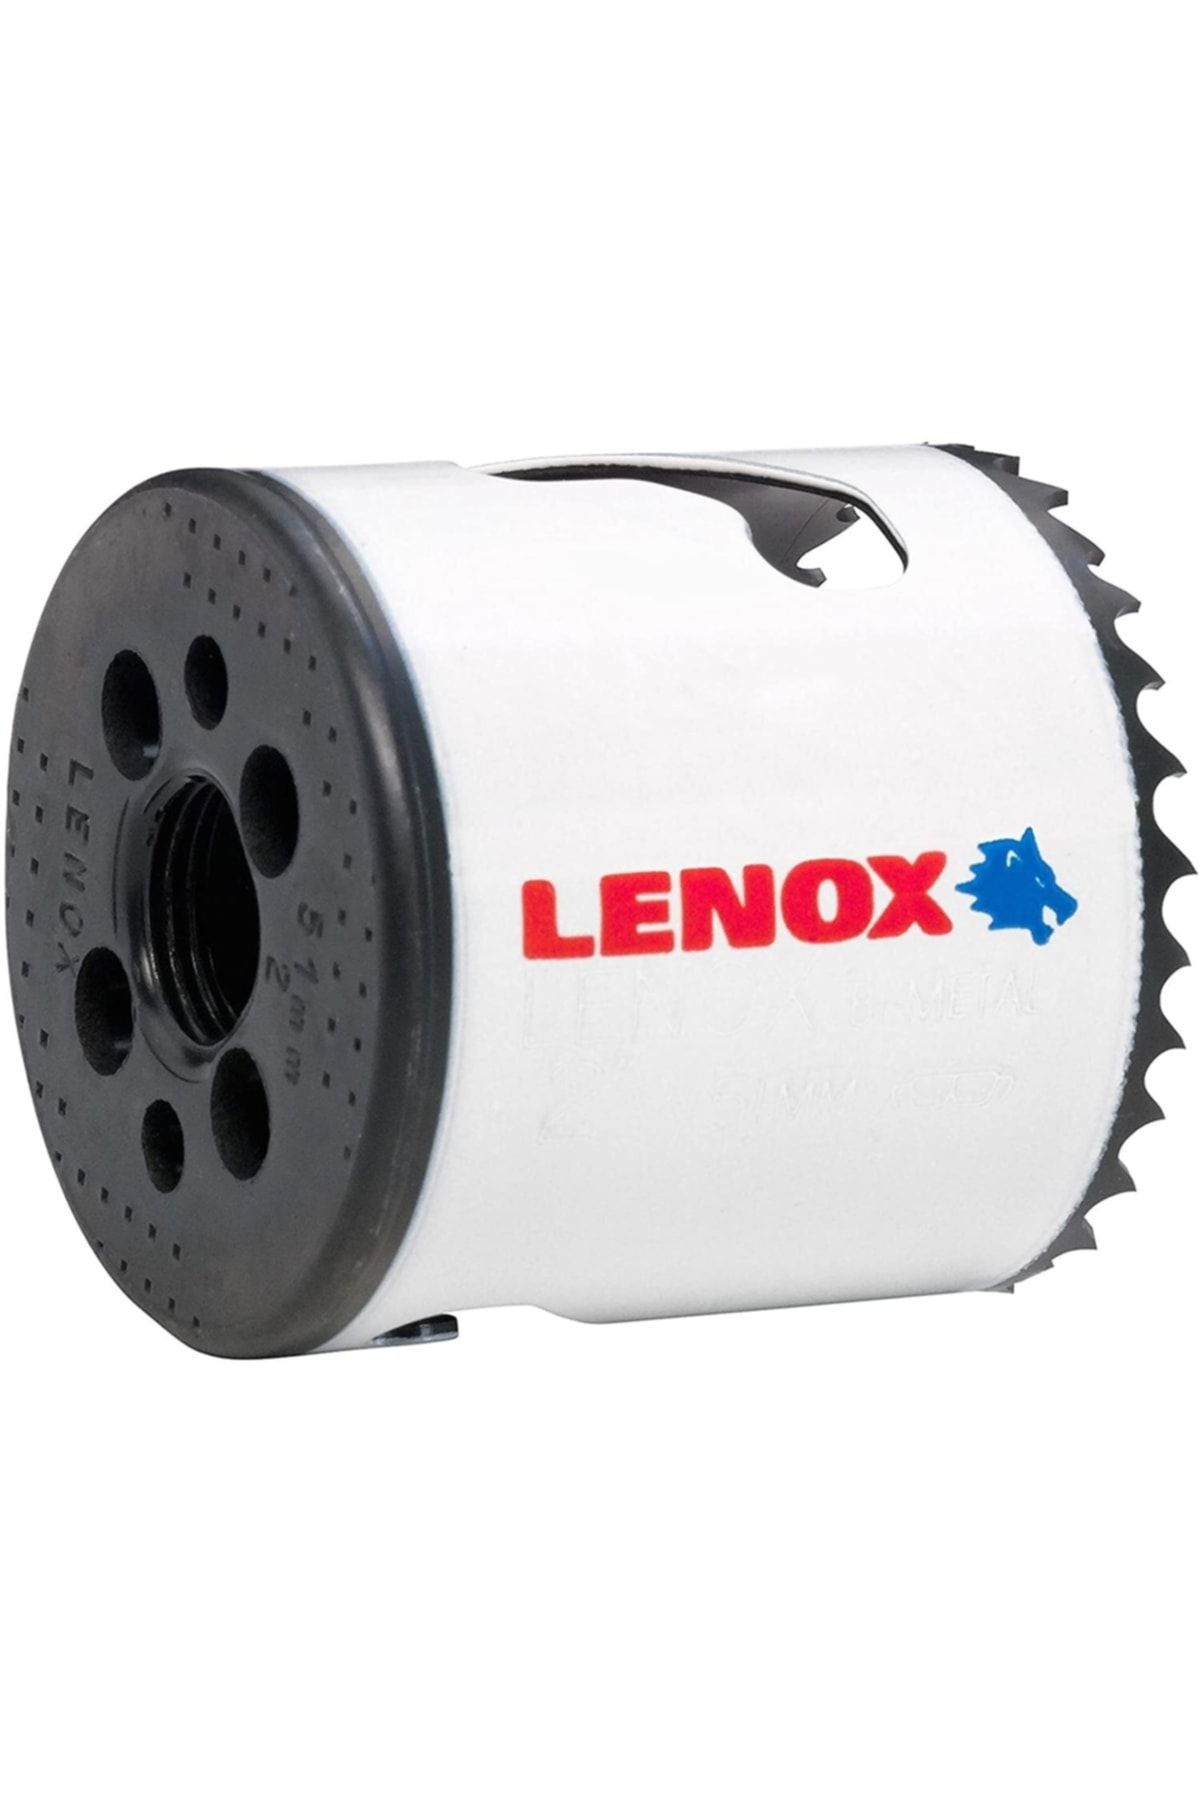 Lenox 3003333l Bi-metal 52mm Delik Testere